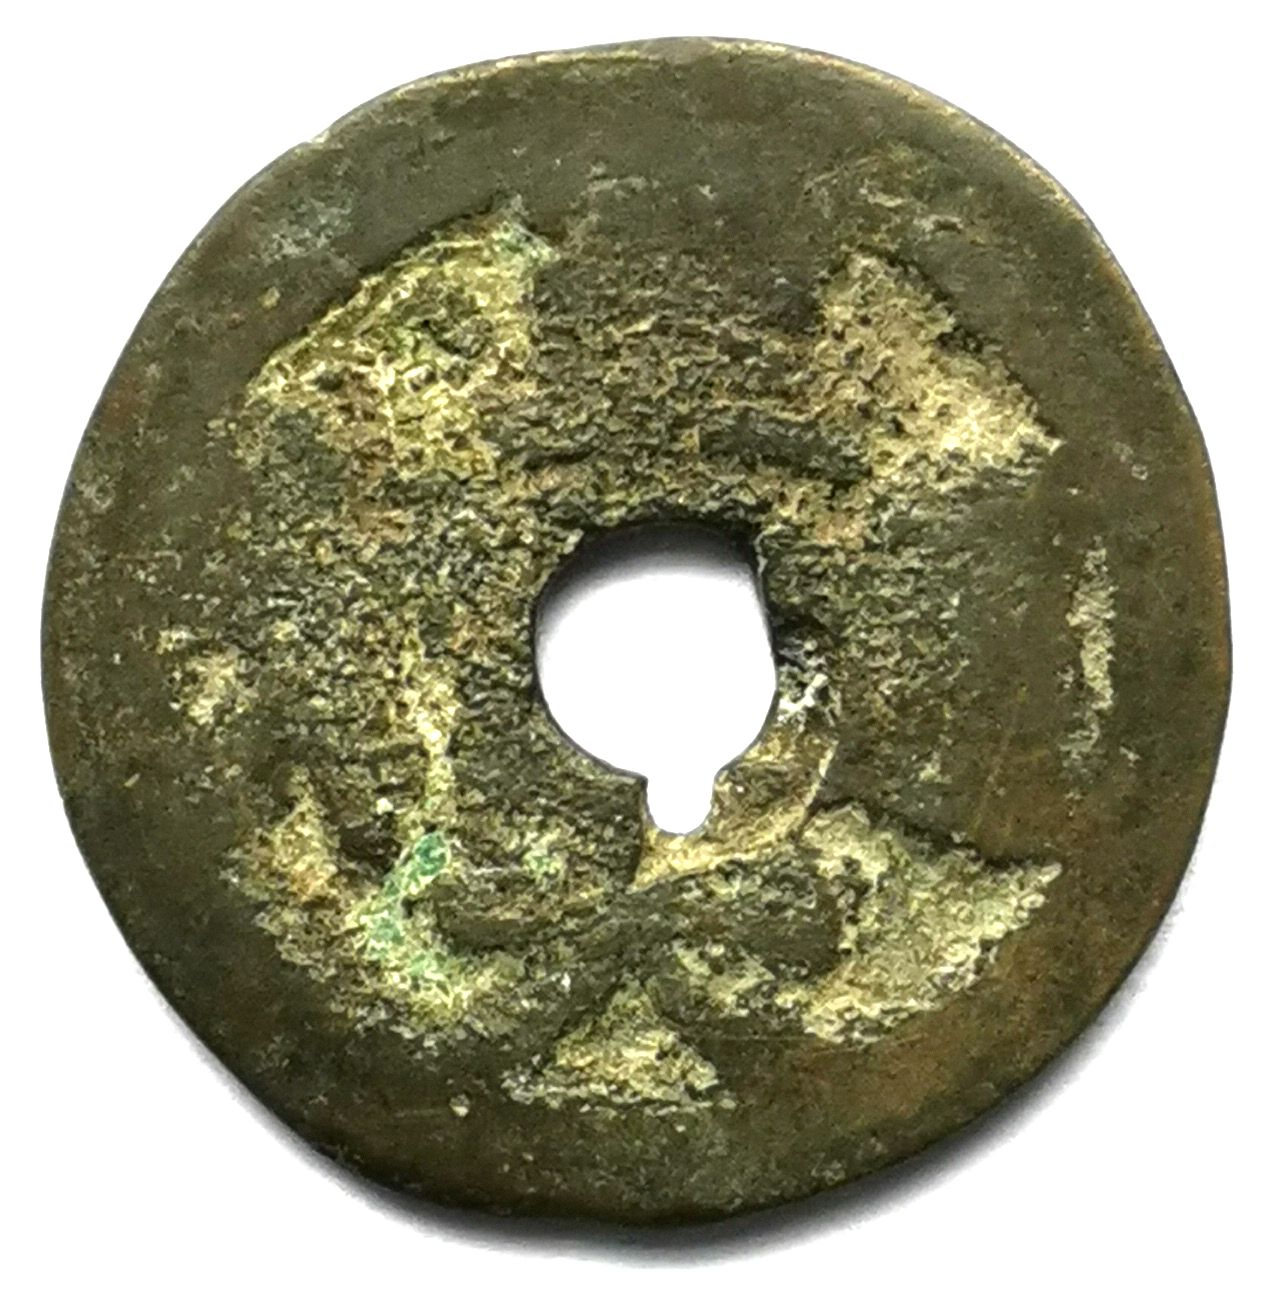 K3352, Zhi-Da Tong-Bao Coin, China Yuan Dynasty AD 1310, Good